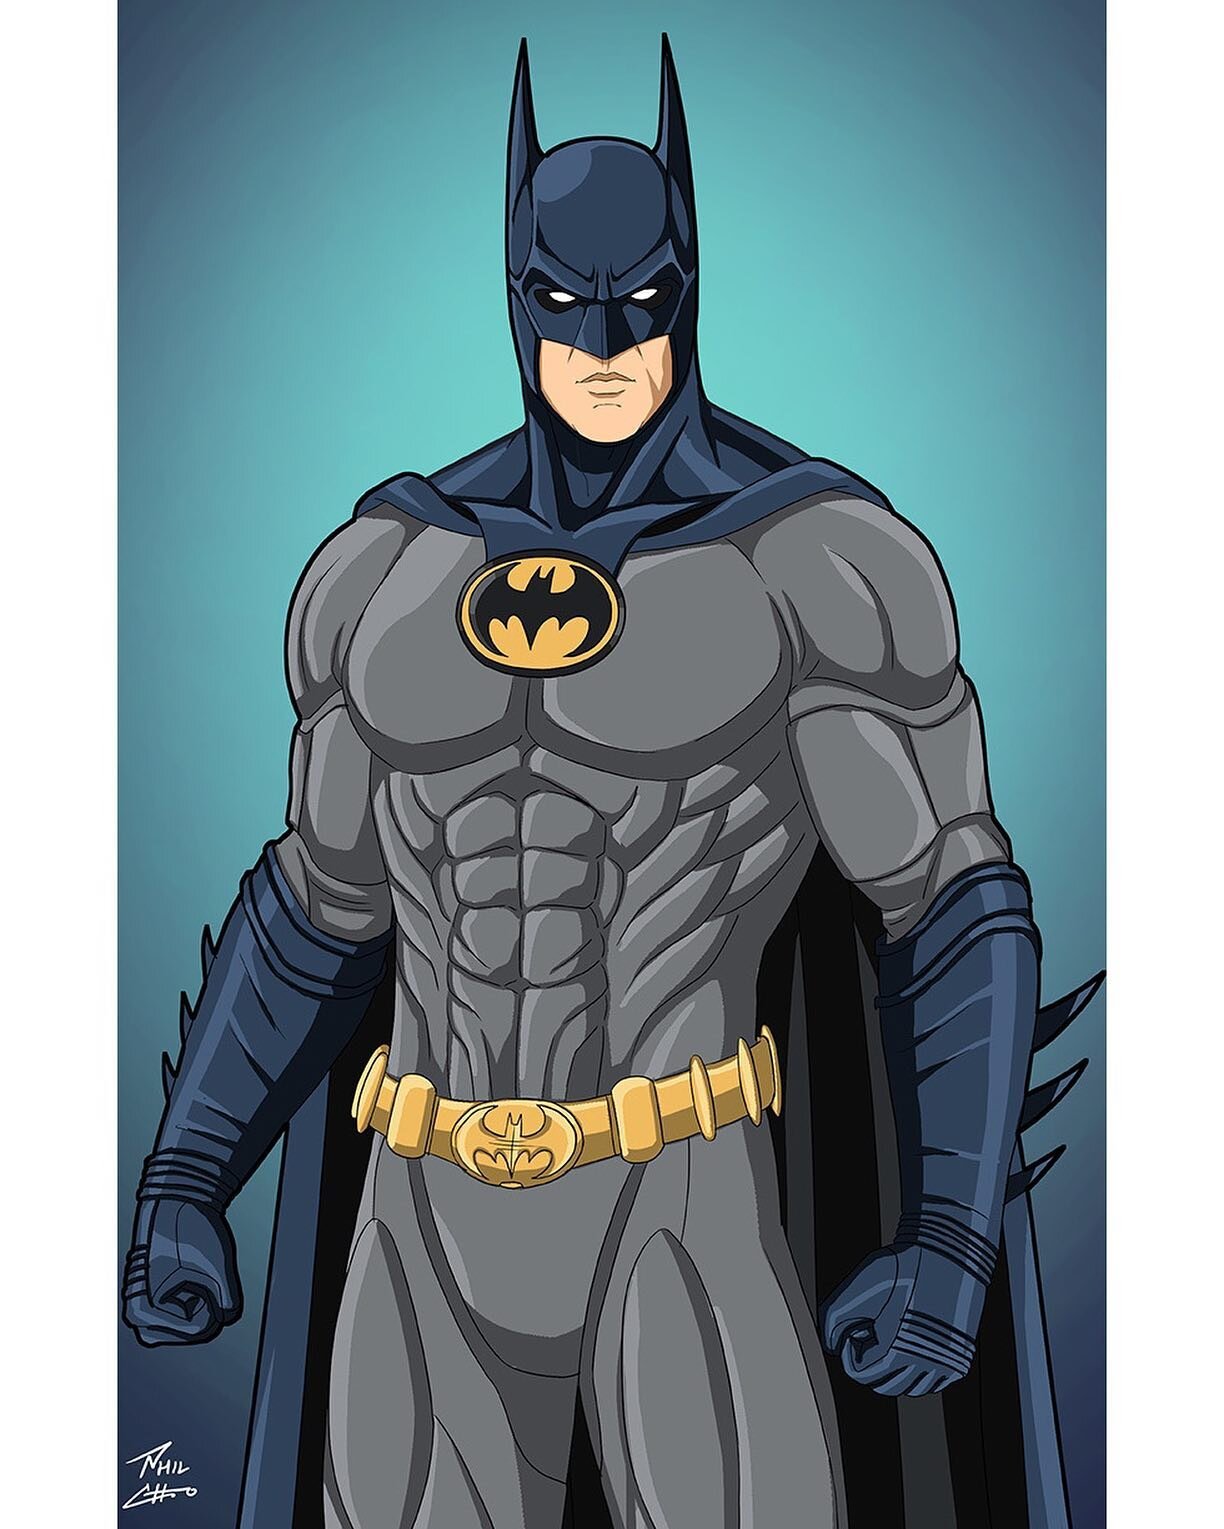 Batman (Val Kilmer), in the Panther Batsuit from Joel Schumacher's &quot;Batman Forever,&quot; in an alternate color scheme (gray and blue).
Character belongs to DC Comics.
Art by Phil Cho.

#batman #valkilmer #grayandblue #dccomics